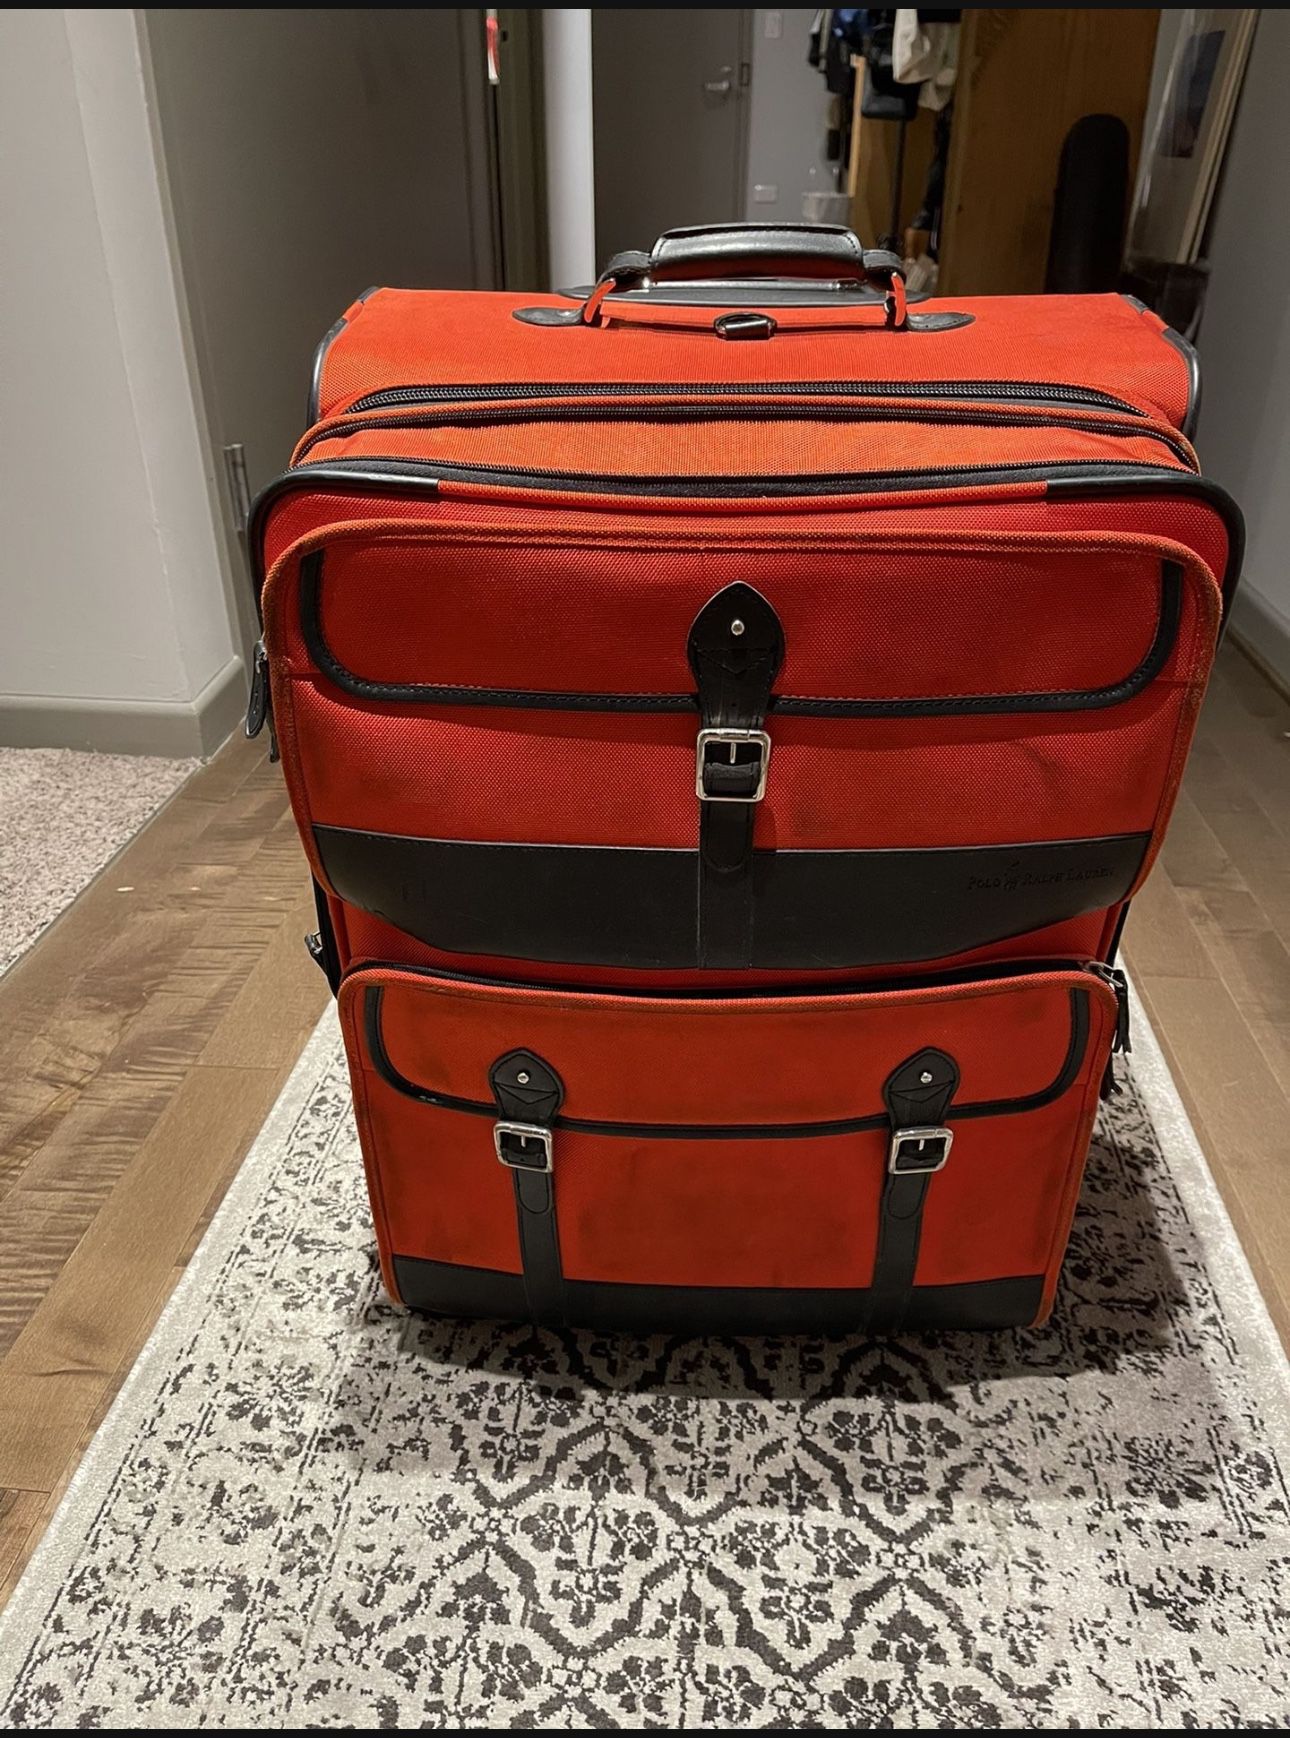 Ralph Lauren Suitcase For Sale!